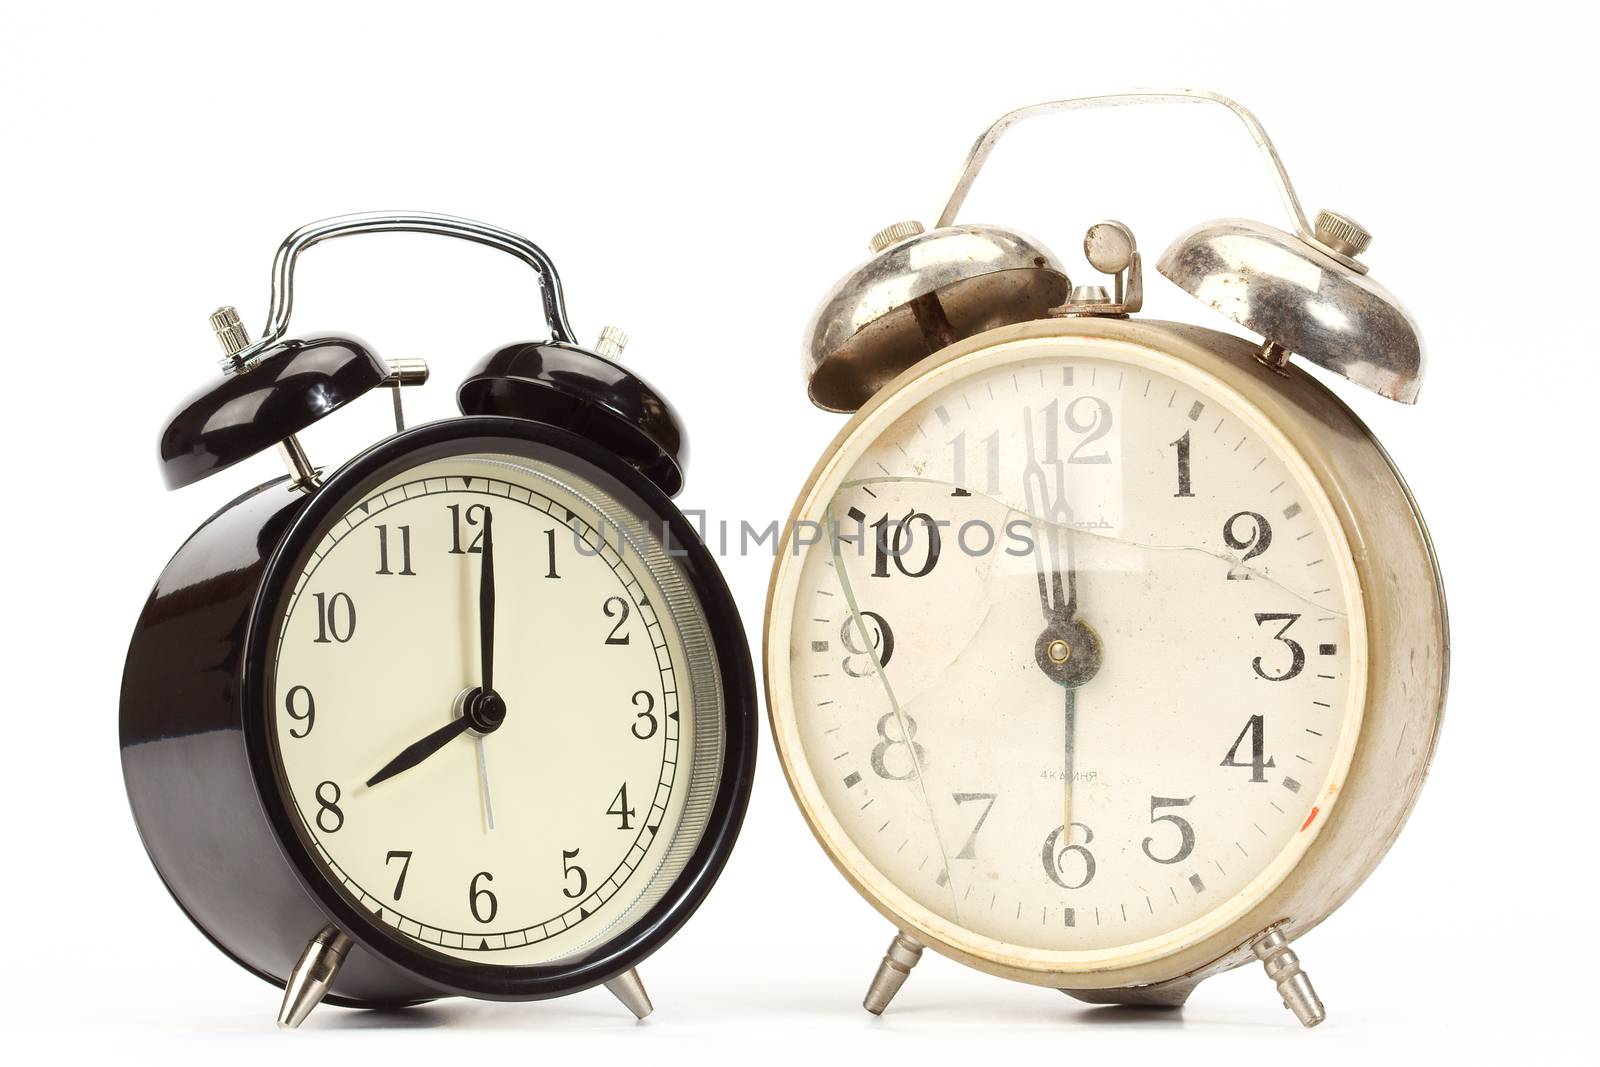  alarm clocks by alexkosev